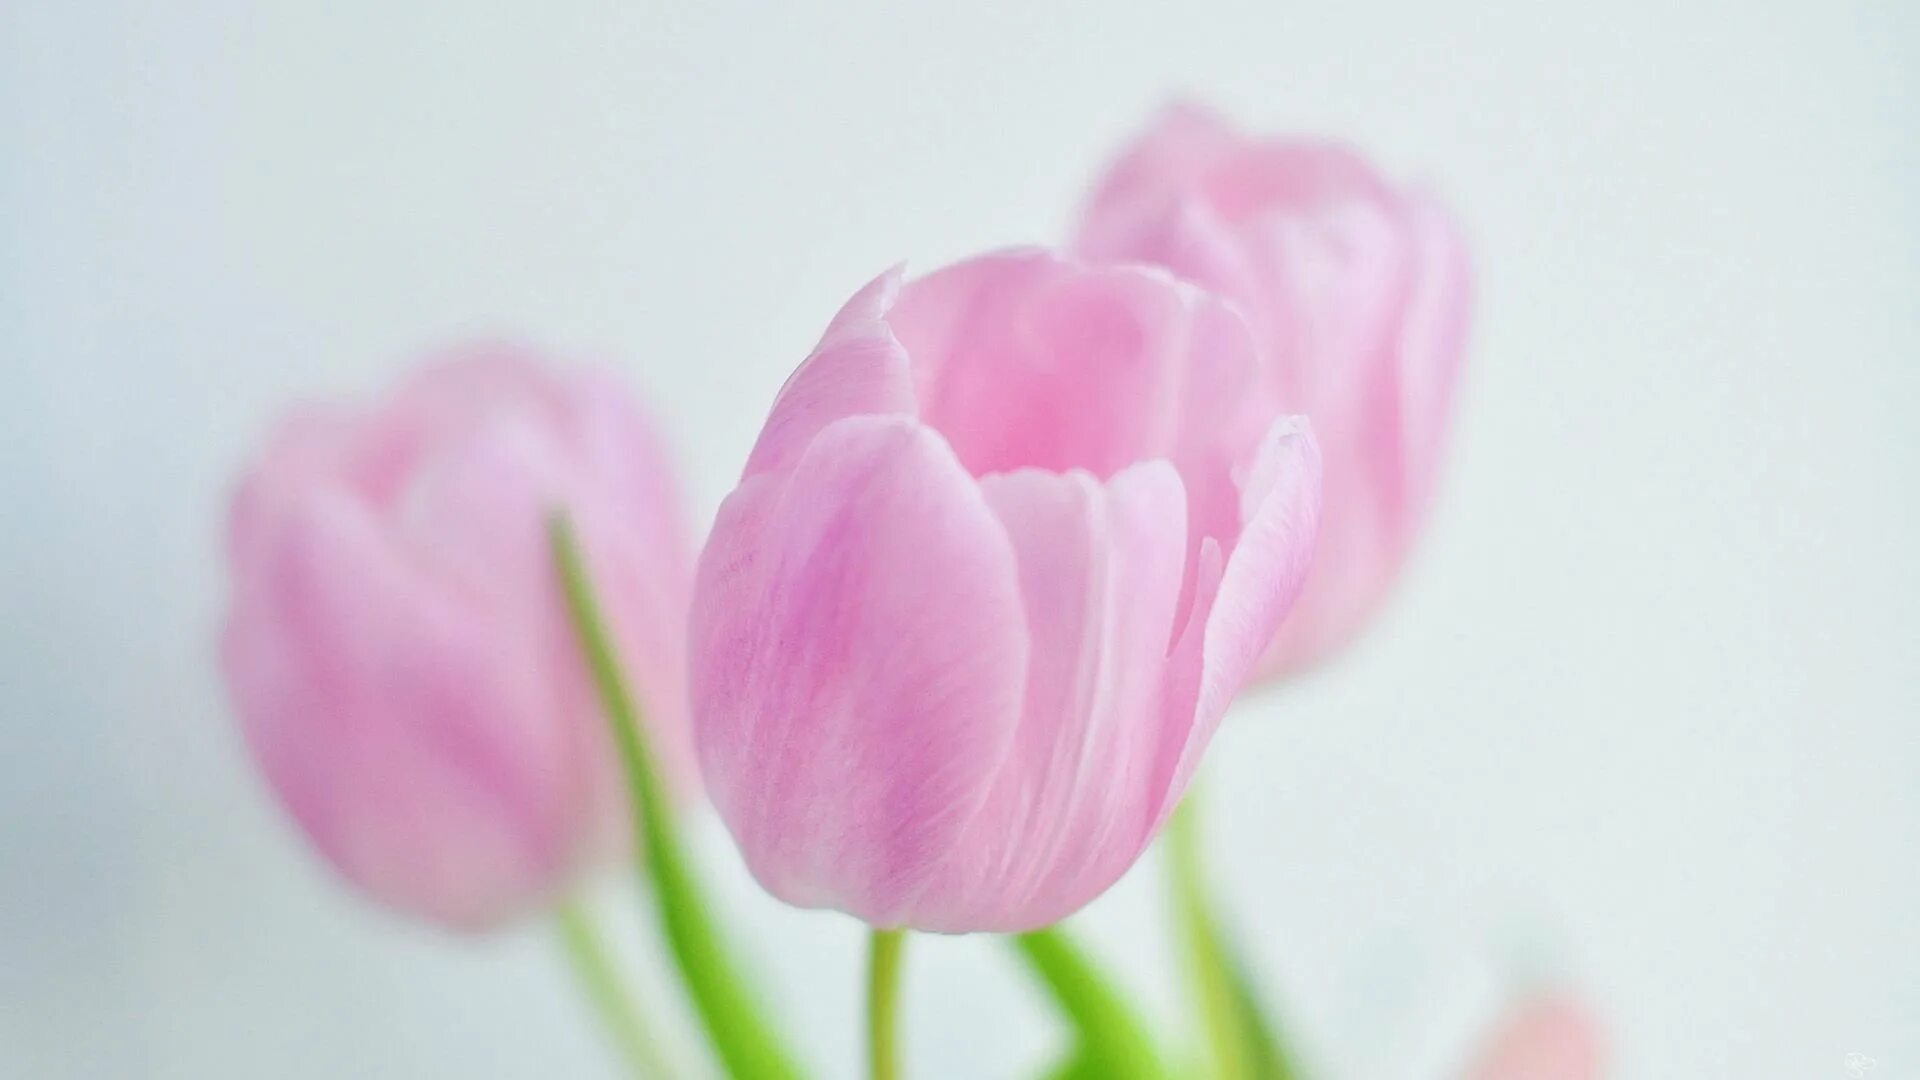 Картинка а4 цветы. Нежные тюльпаны. Розовые тюльпаны. Нежные весенние цветы. Тюльпаны фон.